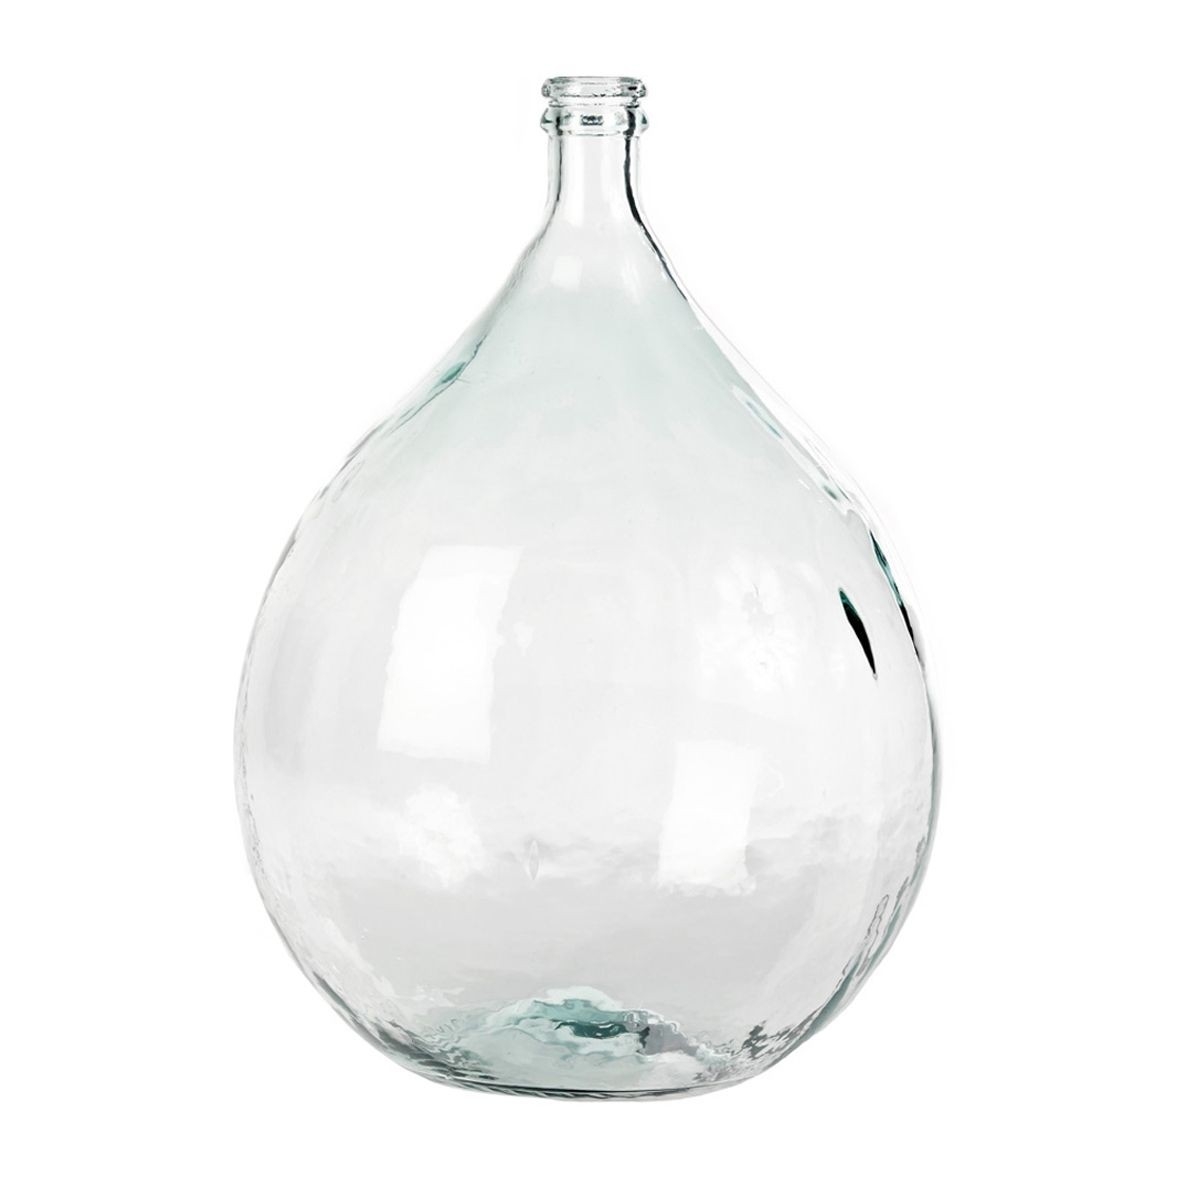 ZBXZM Clear Glass vase Amber Flower vase Tall Floor vase vases for Living Room Color Simple Super Thick Water Drop Crystal Clear Glass vase